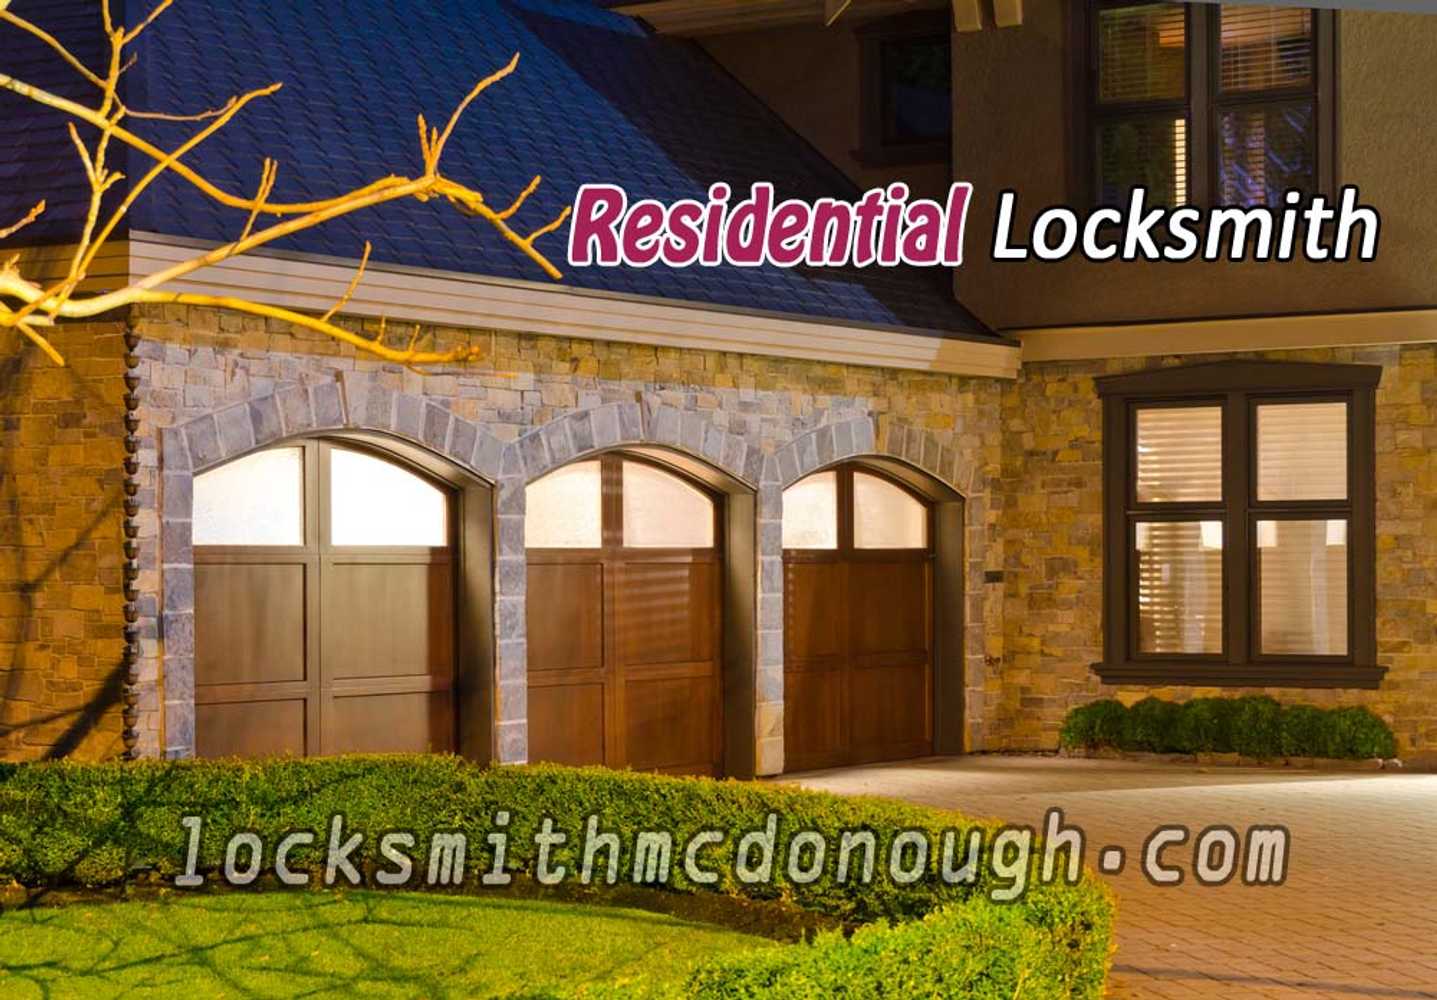 McDonough Secure Locksmith